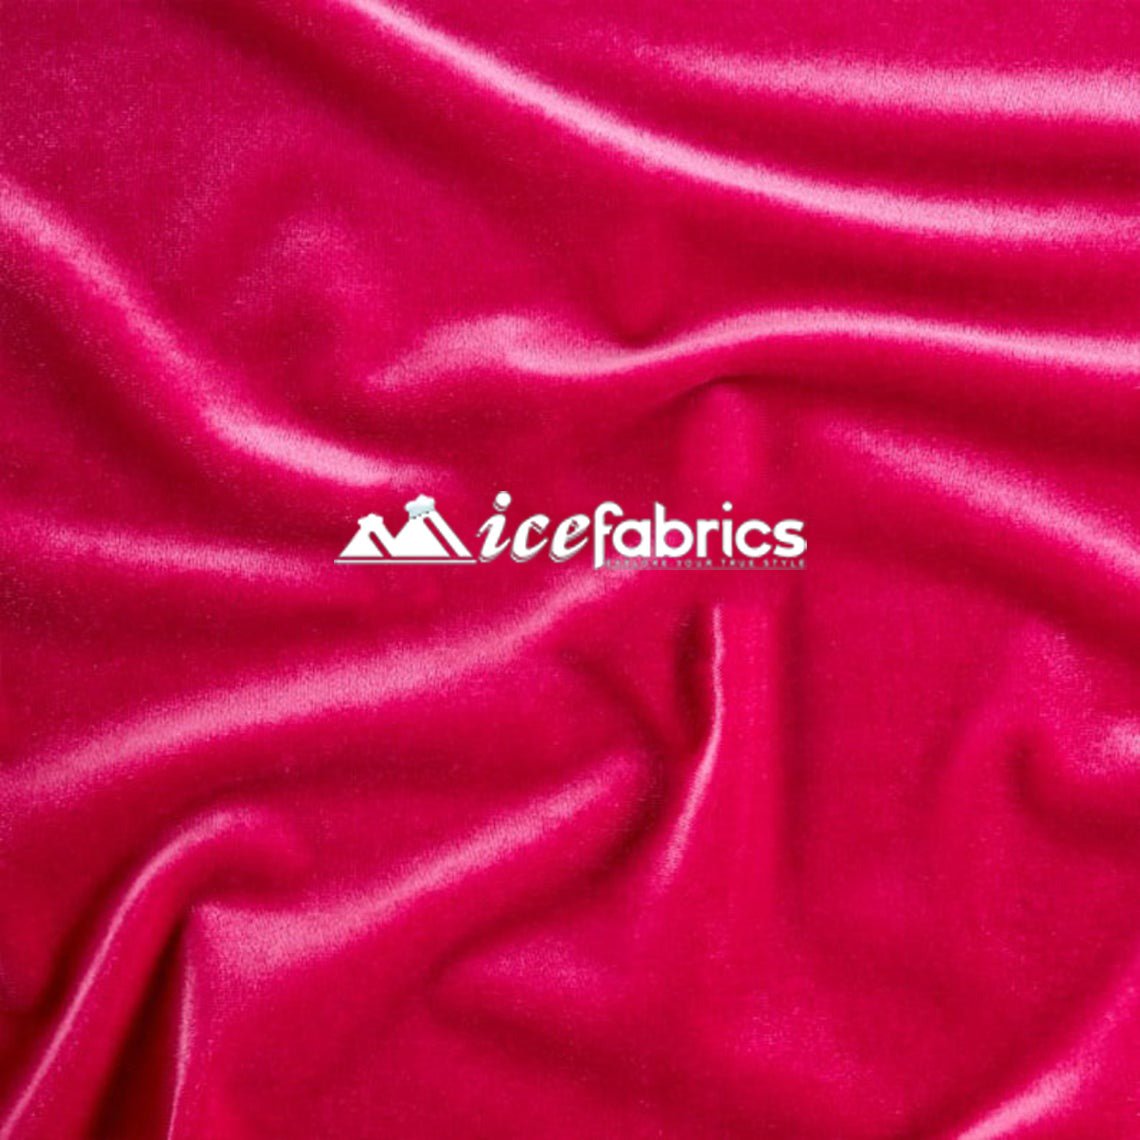 Fuchsia Velvet Fabric By The Yard | 4 Way StretchVelvet FabricICE FABRICSICE FABRICSBy The Yard (58" Wide)Fuchsia Velvet Fabric By The Yard | 4 Way Stretch ICE FABRICS